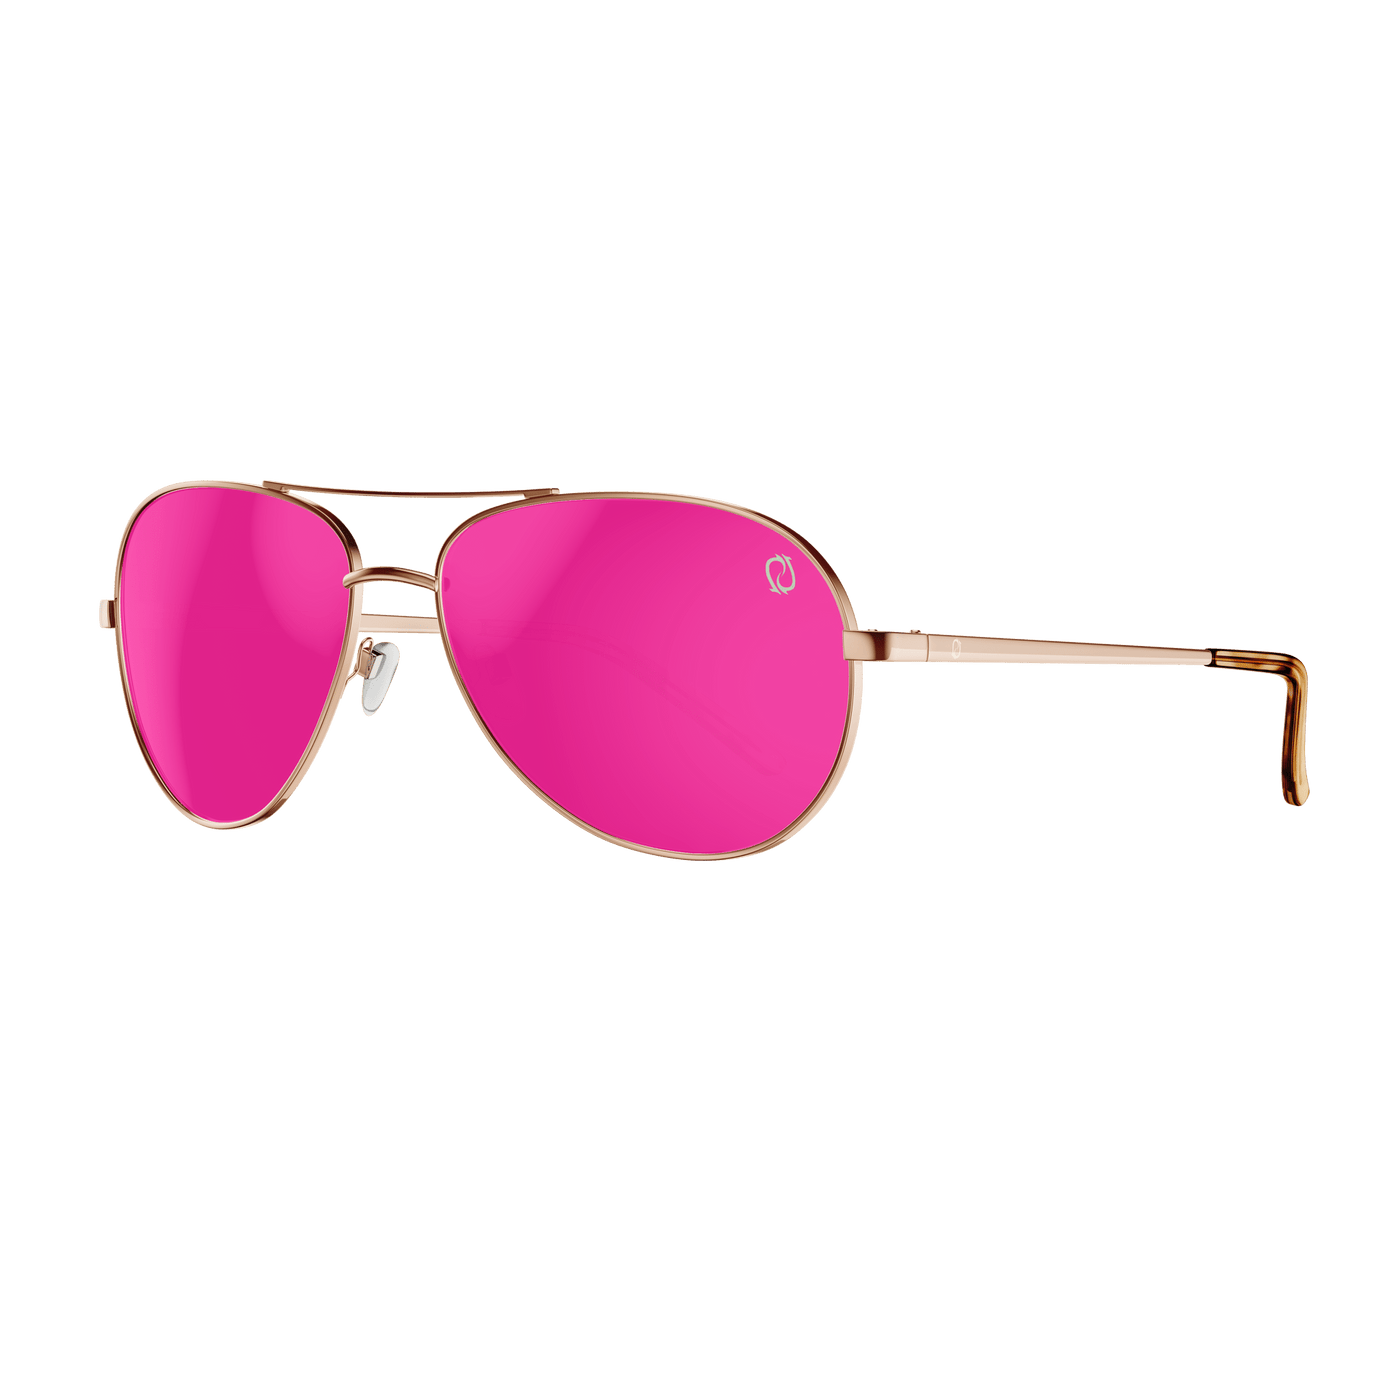 Redtail Republic Sunglasses Accessories Redtail Republic 